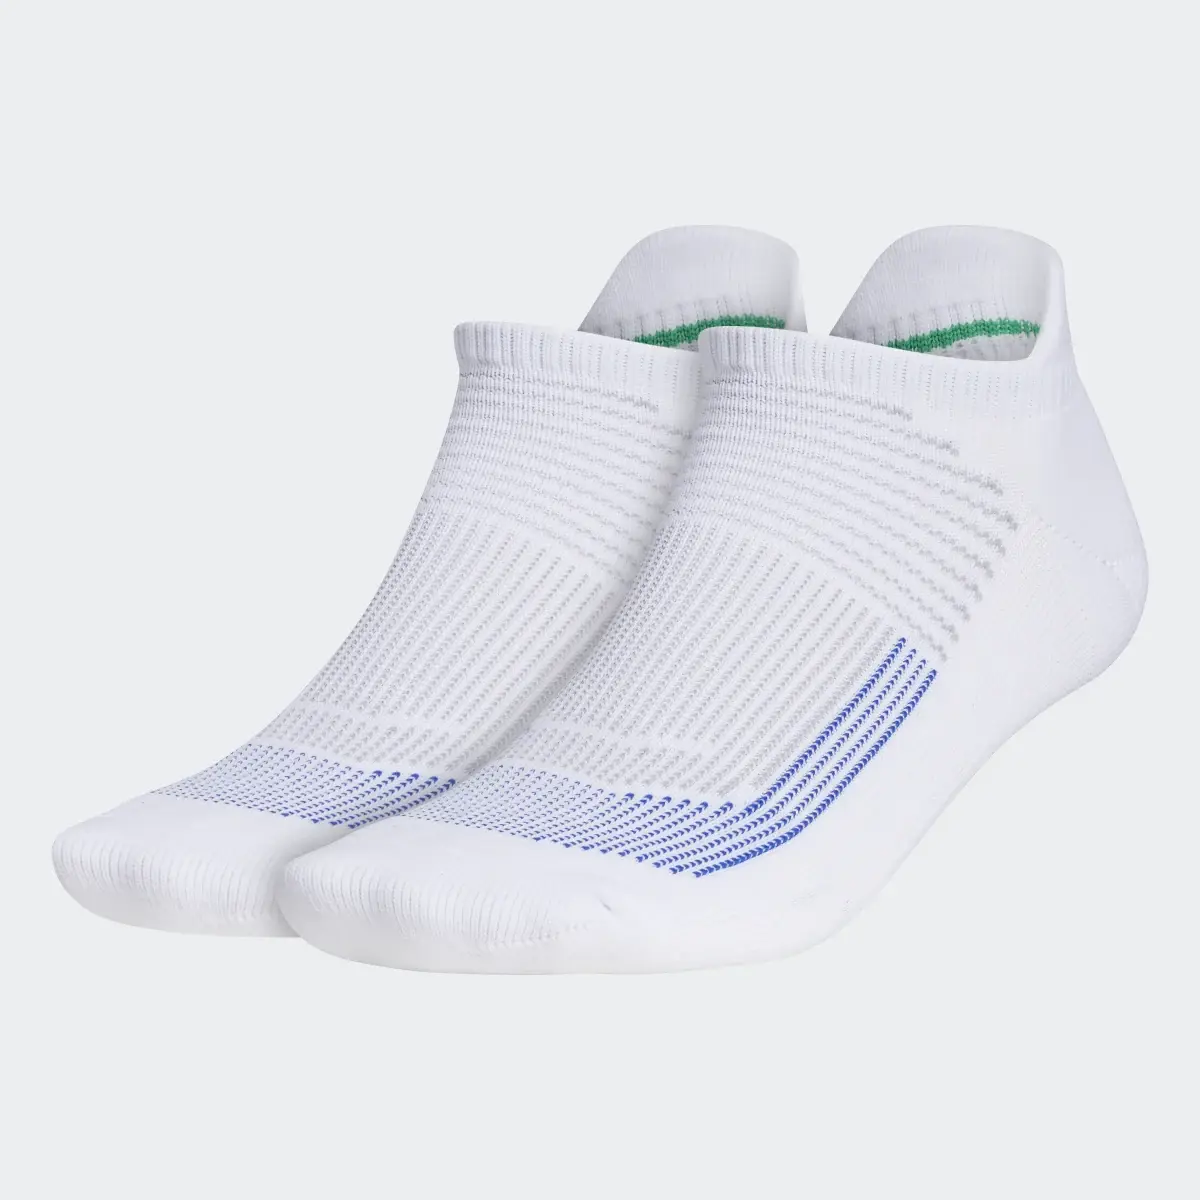 Adidas Superlite Ultraboost Tabbed No-Show Socks 2 Pairs. 2